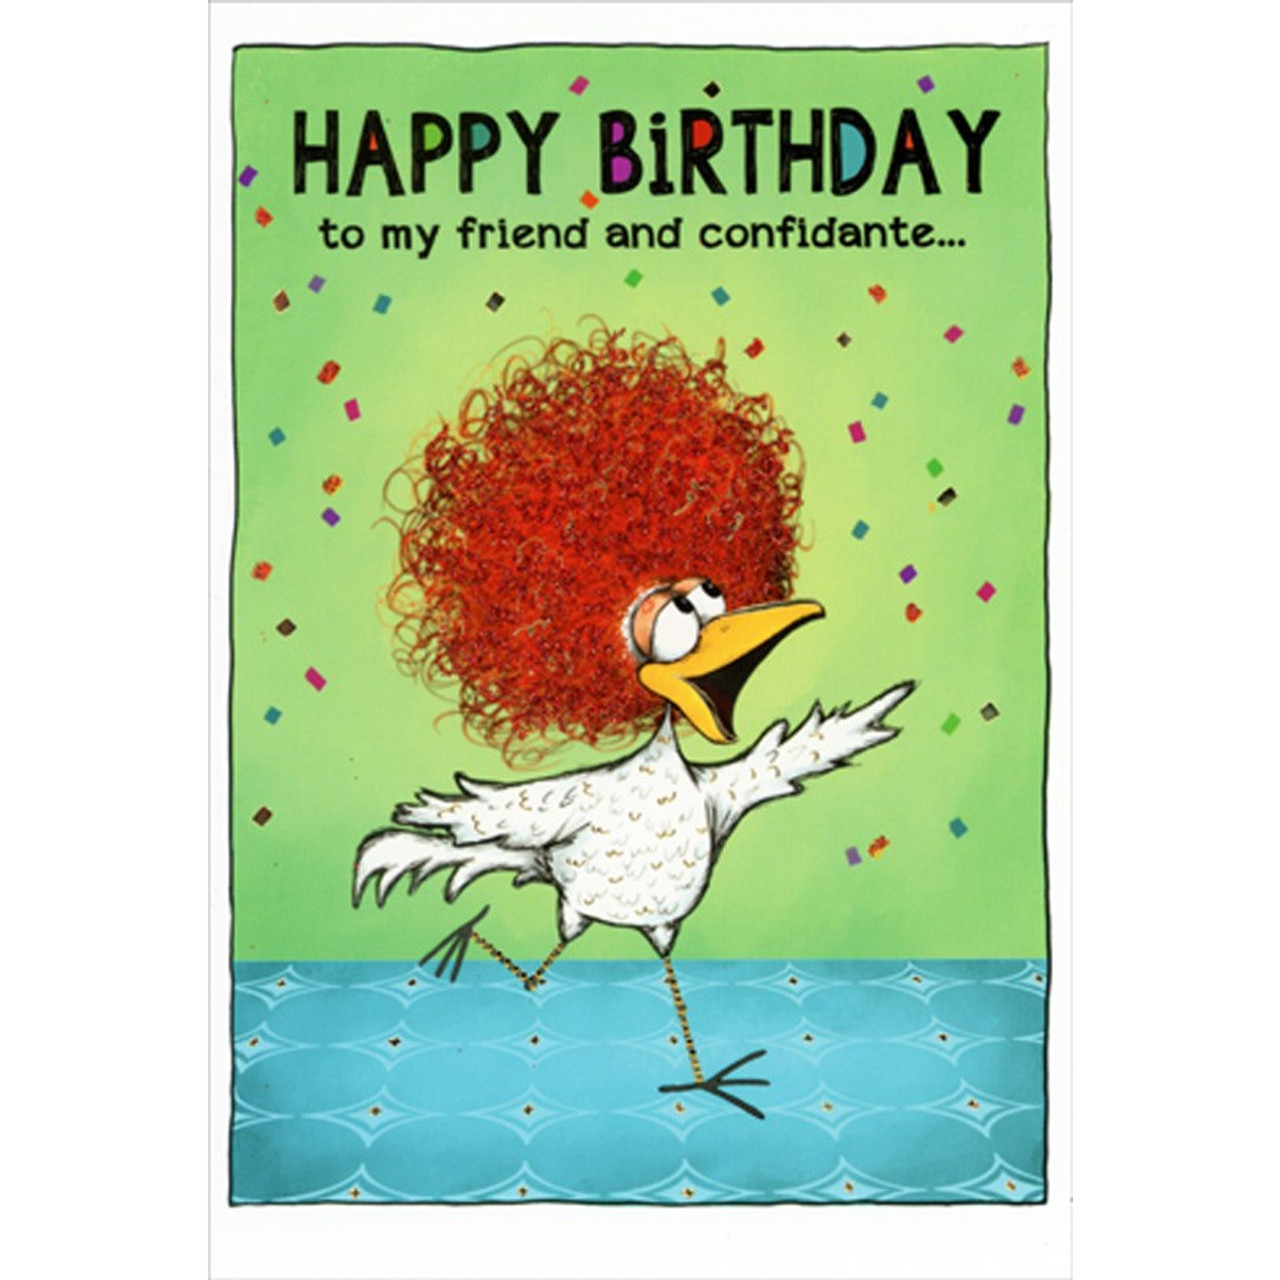 Irma : Friend and Confidante Funny Birthday Card for Friend 